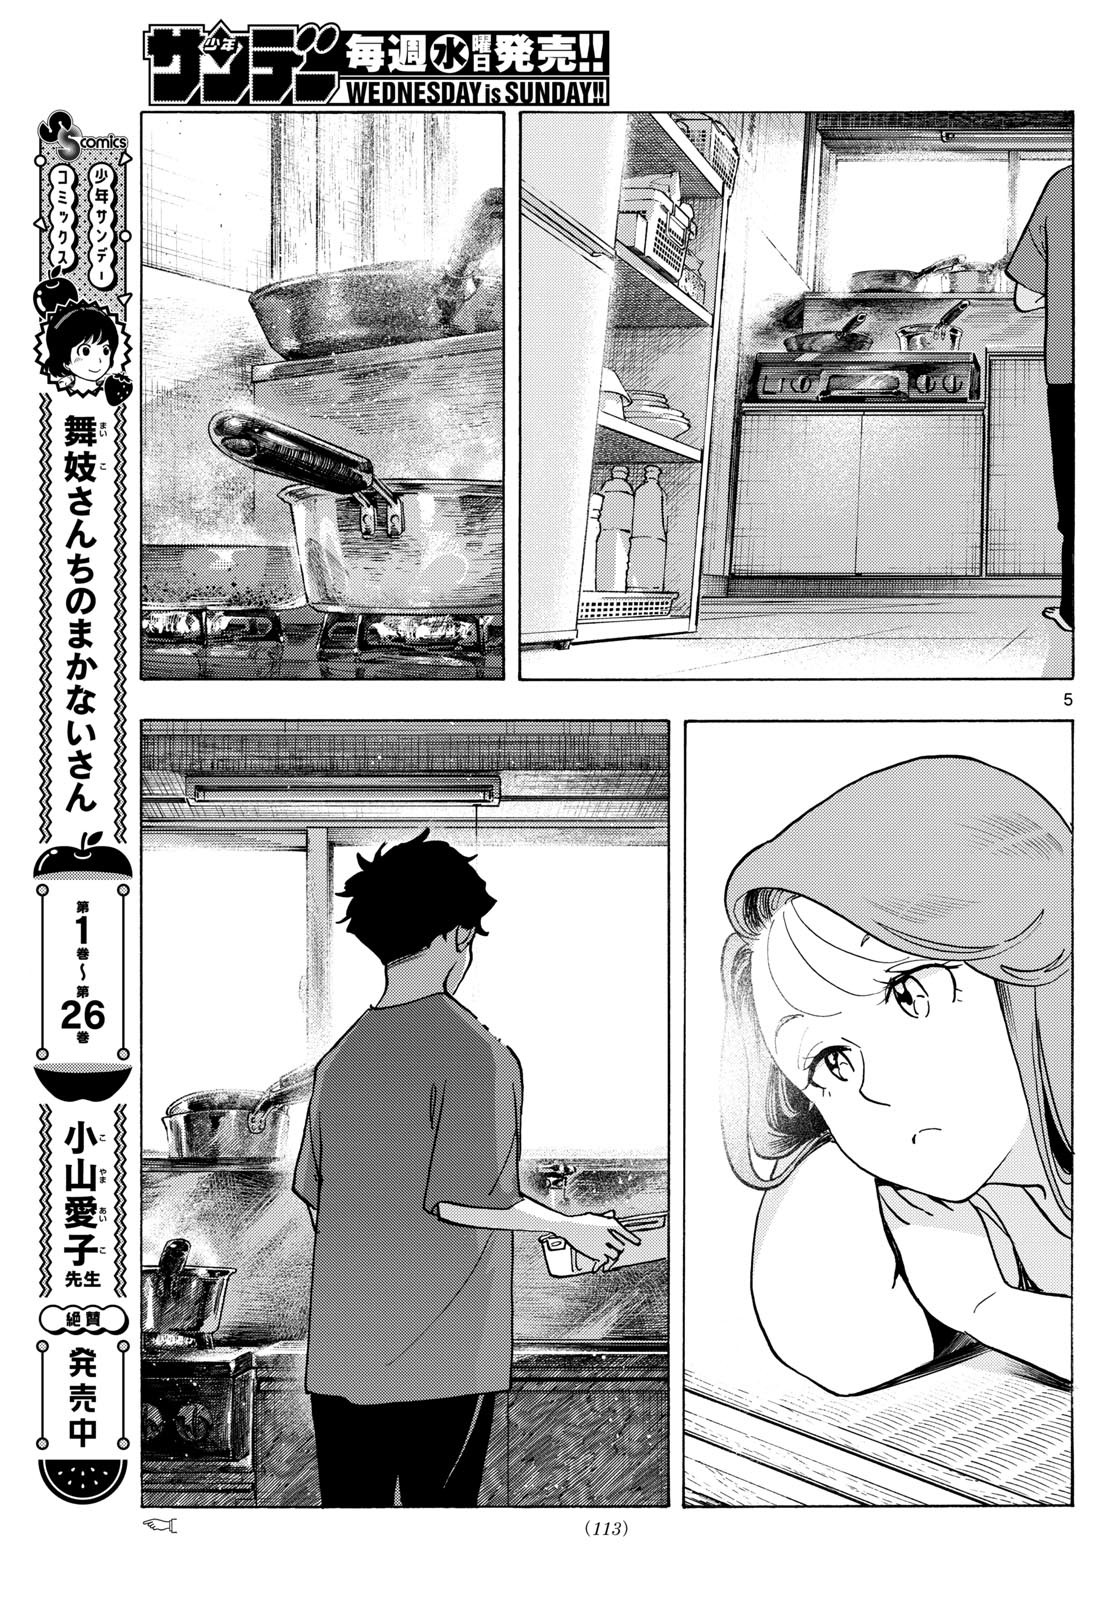 Maiko-san Chi no Makanai-san - Chapter 306 - Page 5